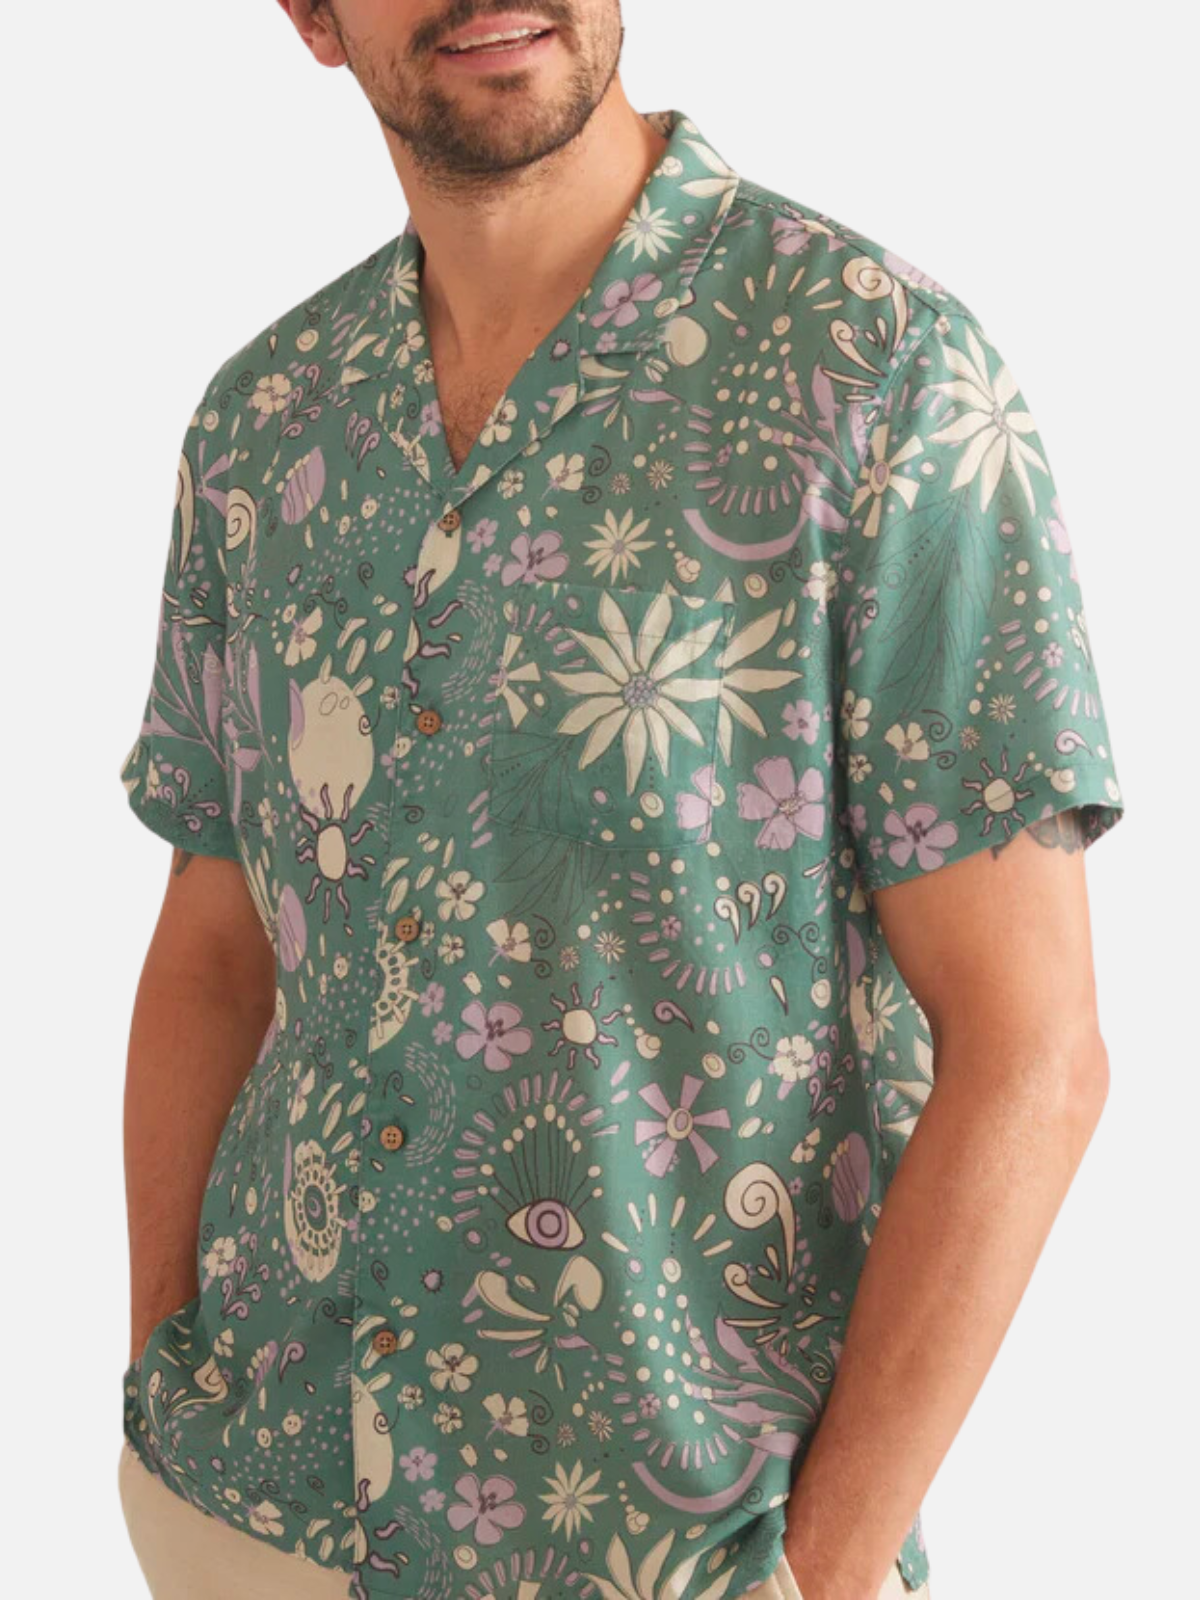 marine layer tencel linen resort shirt green floral kempt athens ga georgia men's clothing store